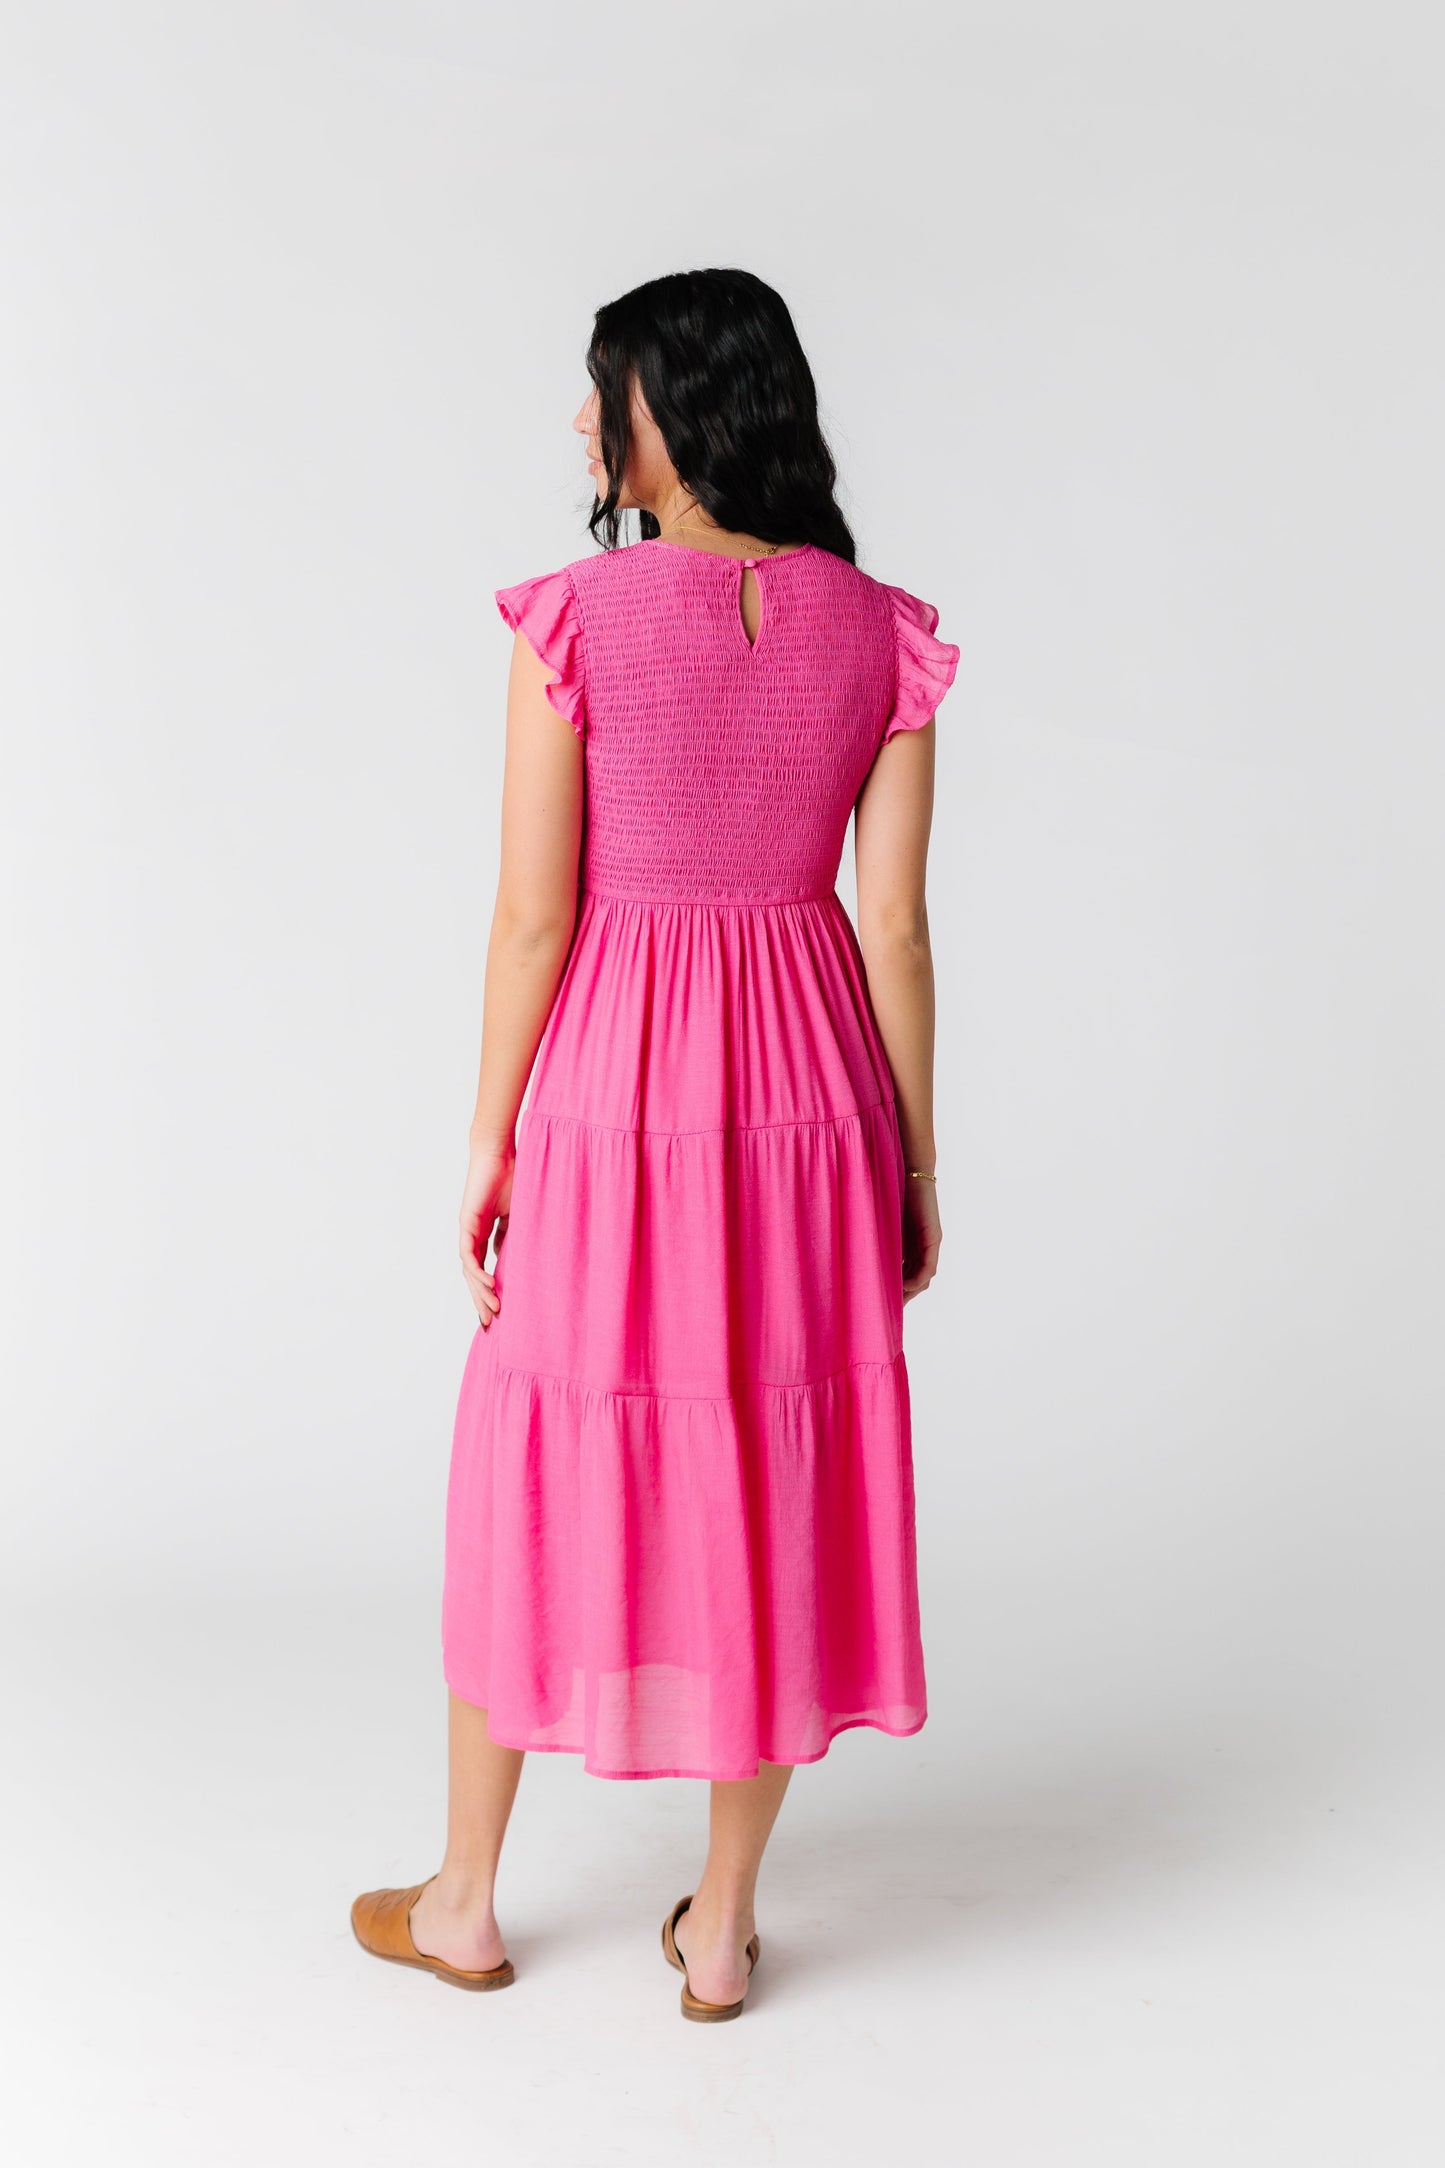 All In Smocked Dress - Light Fuchsia WOMEN'S DRESS Blu Pepper 